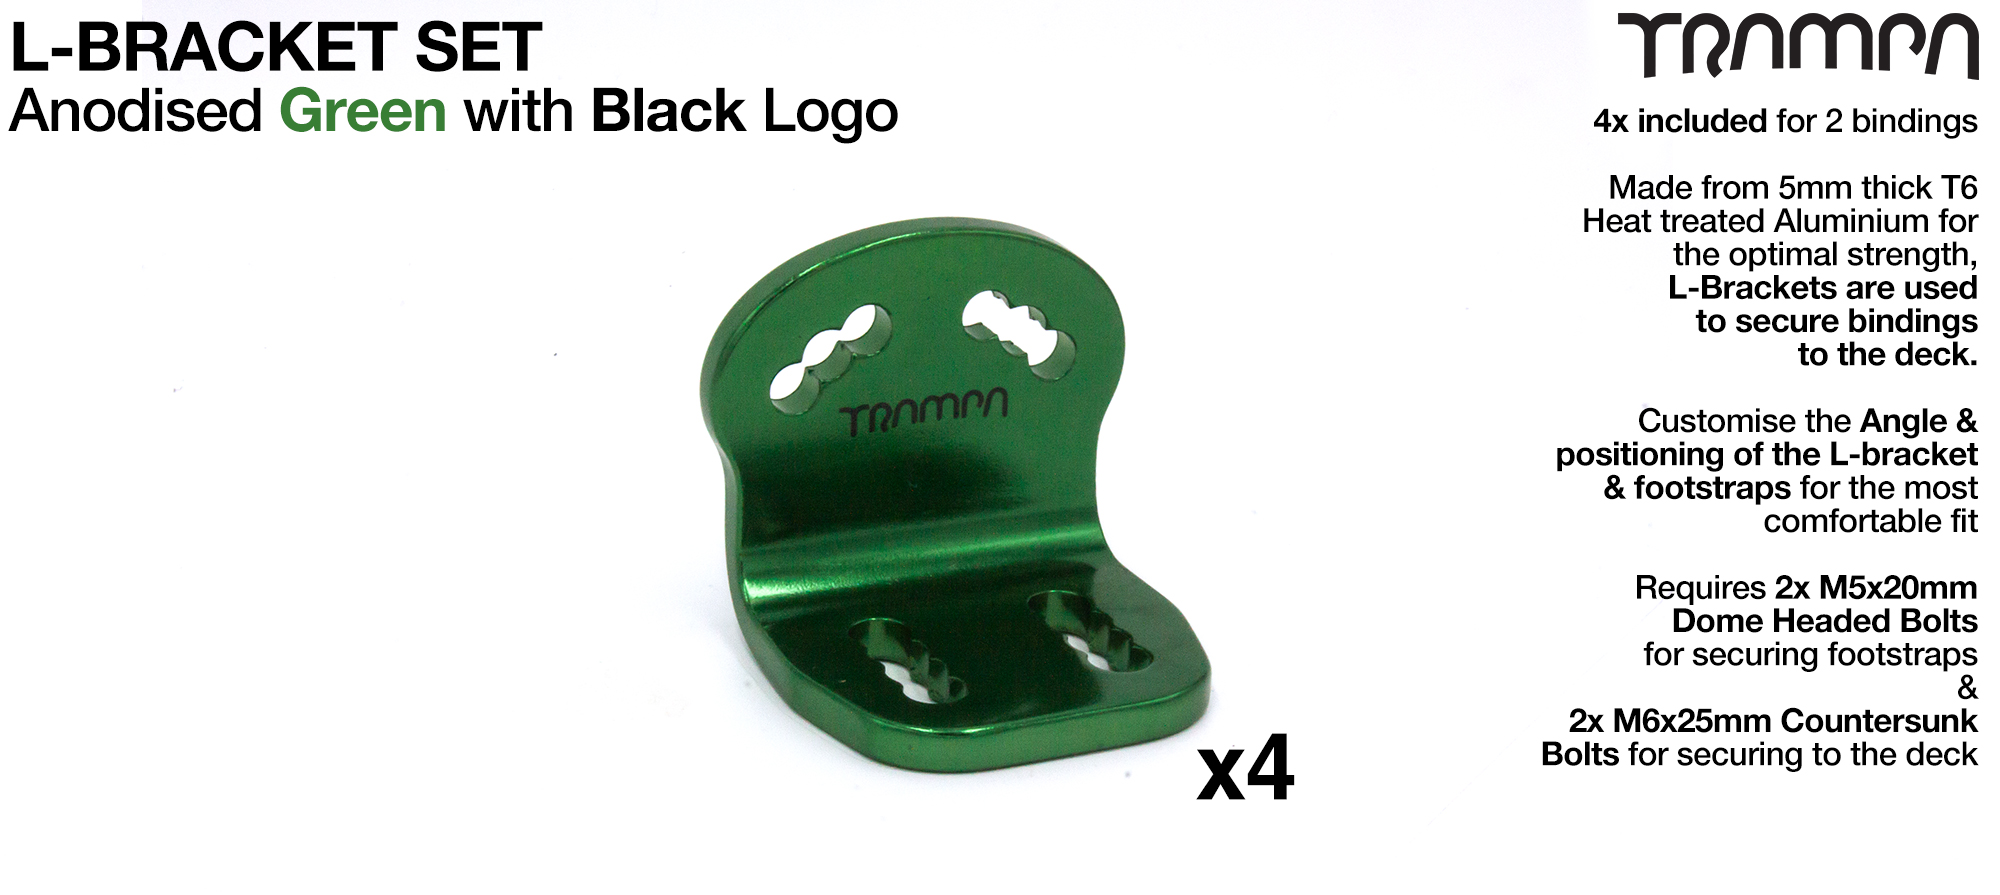 L Bracket - Anodised GREEN with BLACK logo x4